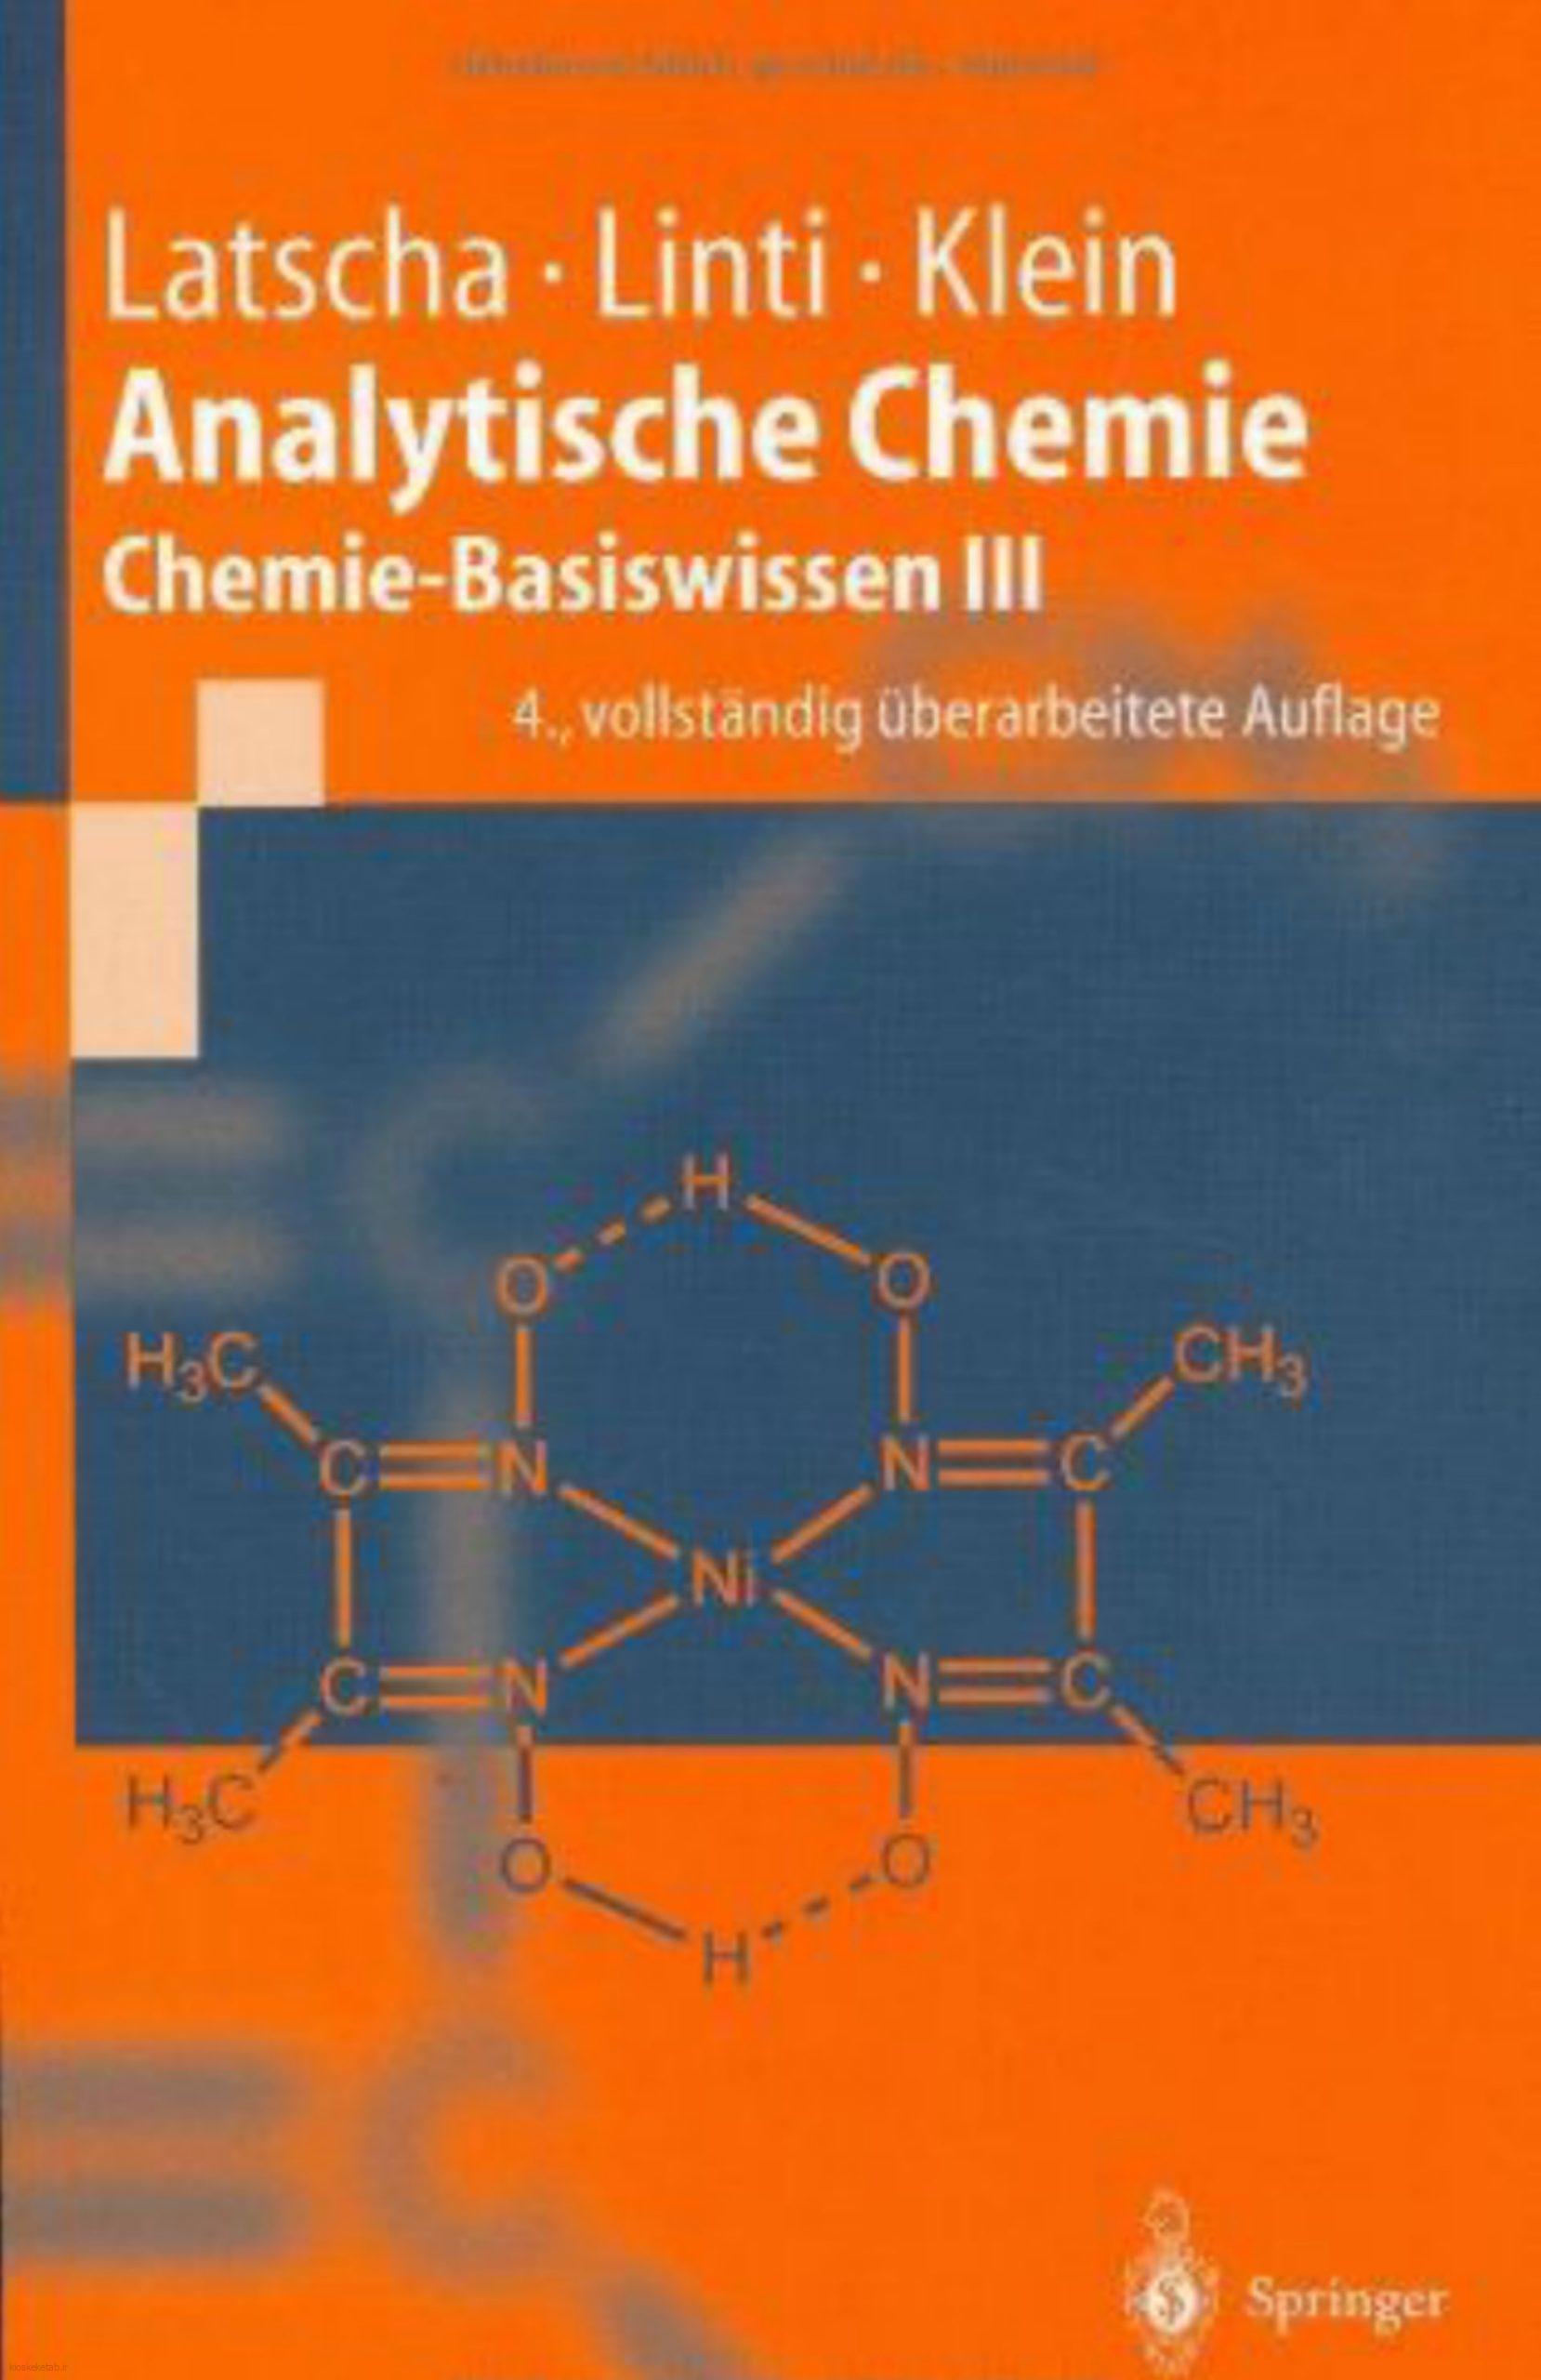 دانلود کتاب آلمانیanalytische chemie chemie basiswissen